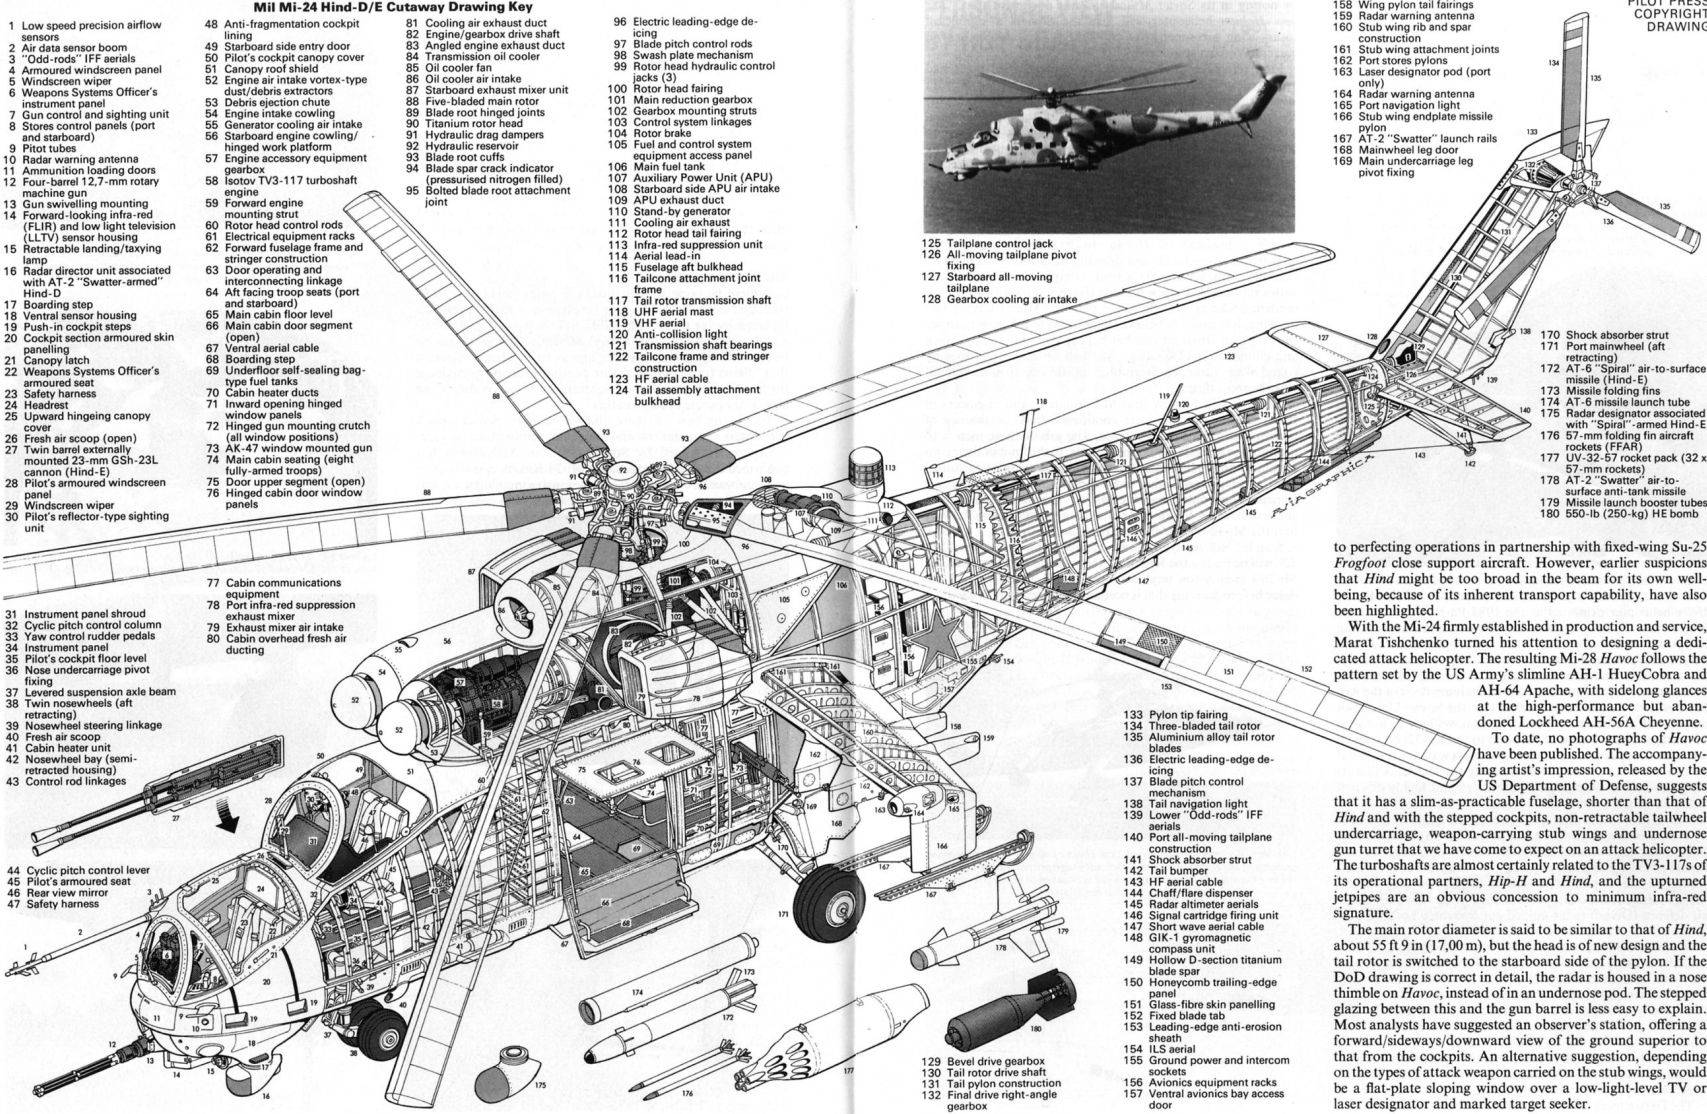 Вертолет ми-4. фото. характеристики. история.